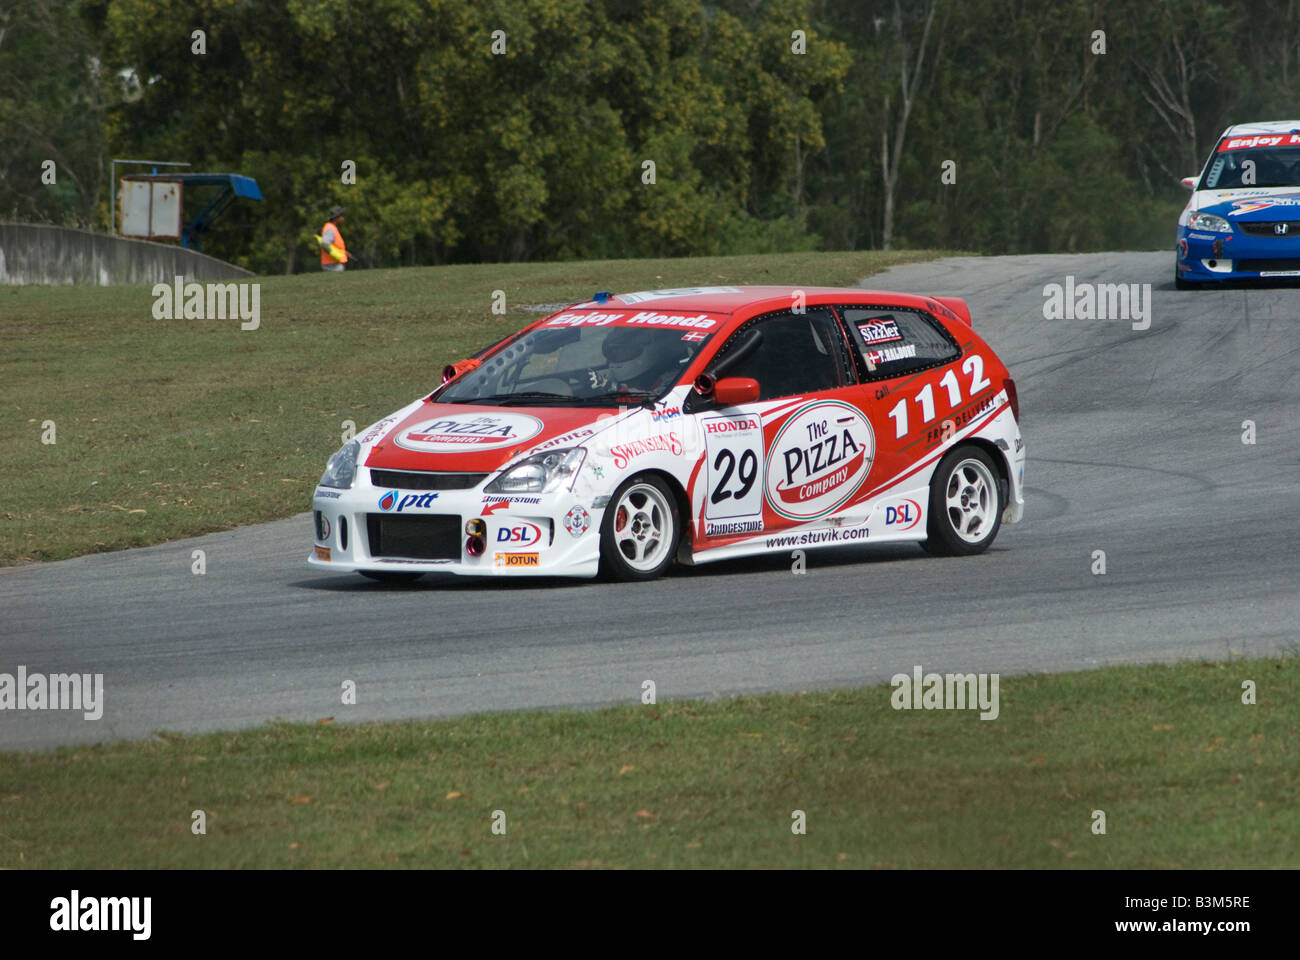 Honda Civic EP3 Type R racing at the Bira racing circuit in Pattaya Stock Photo